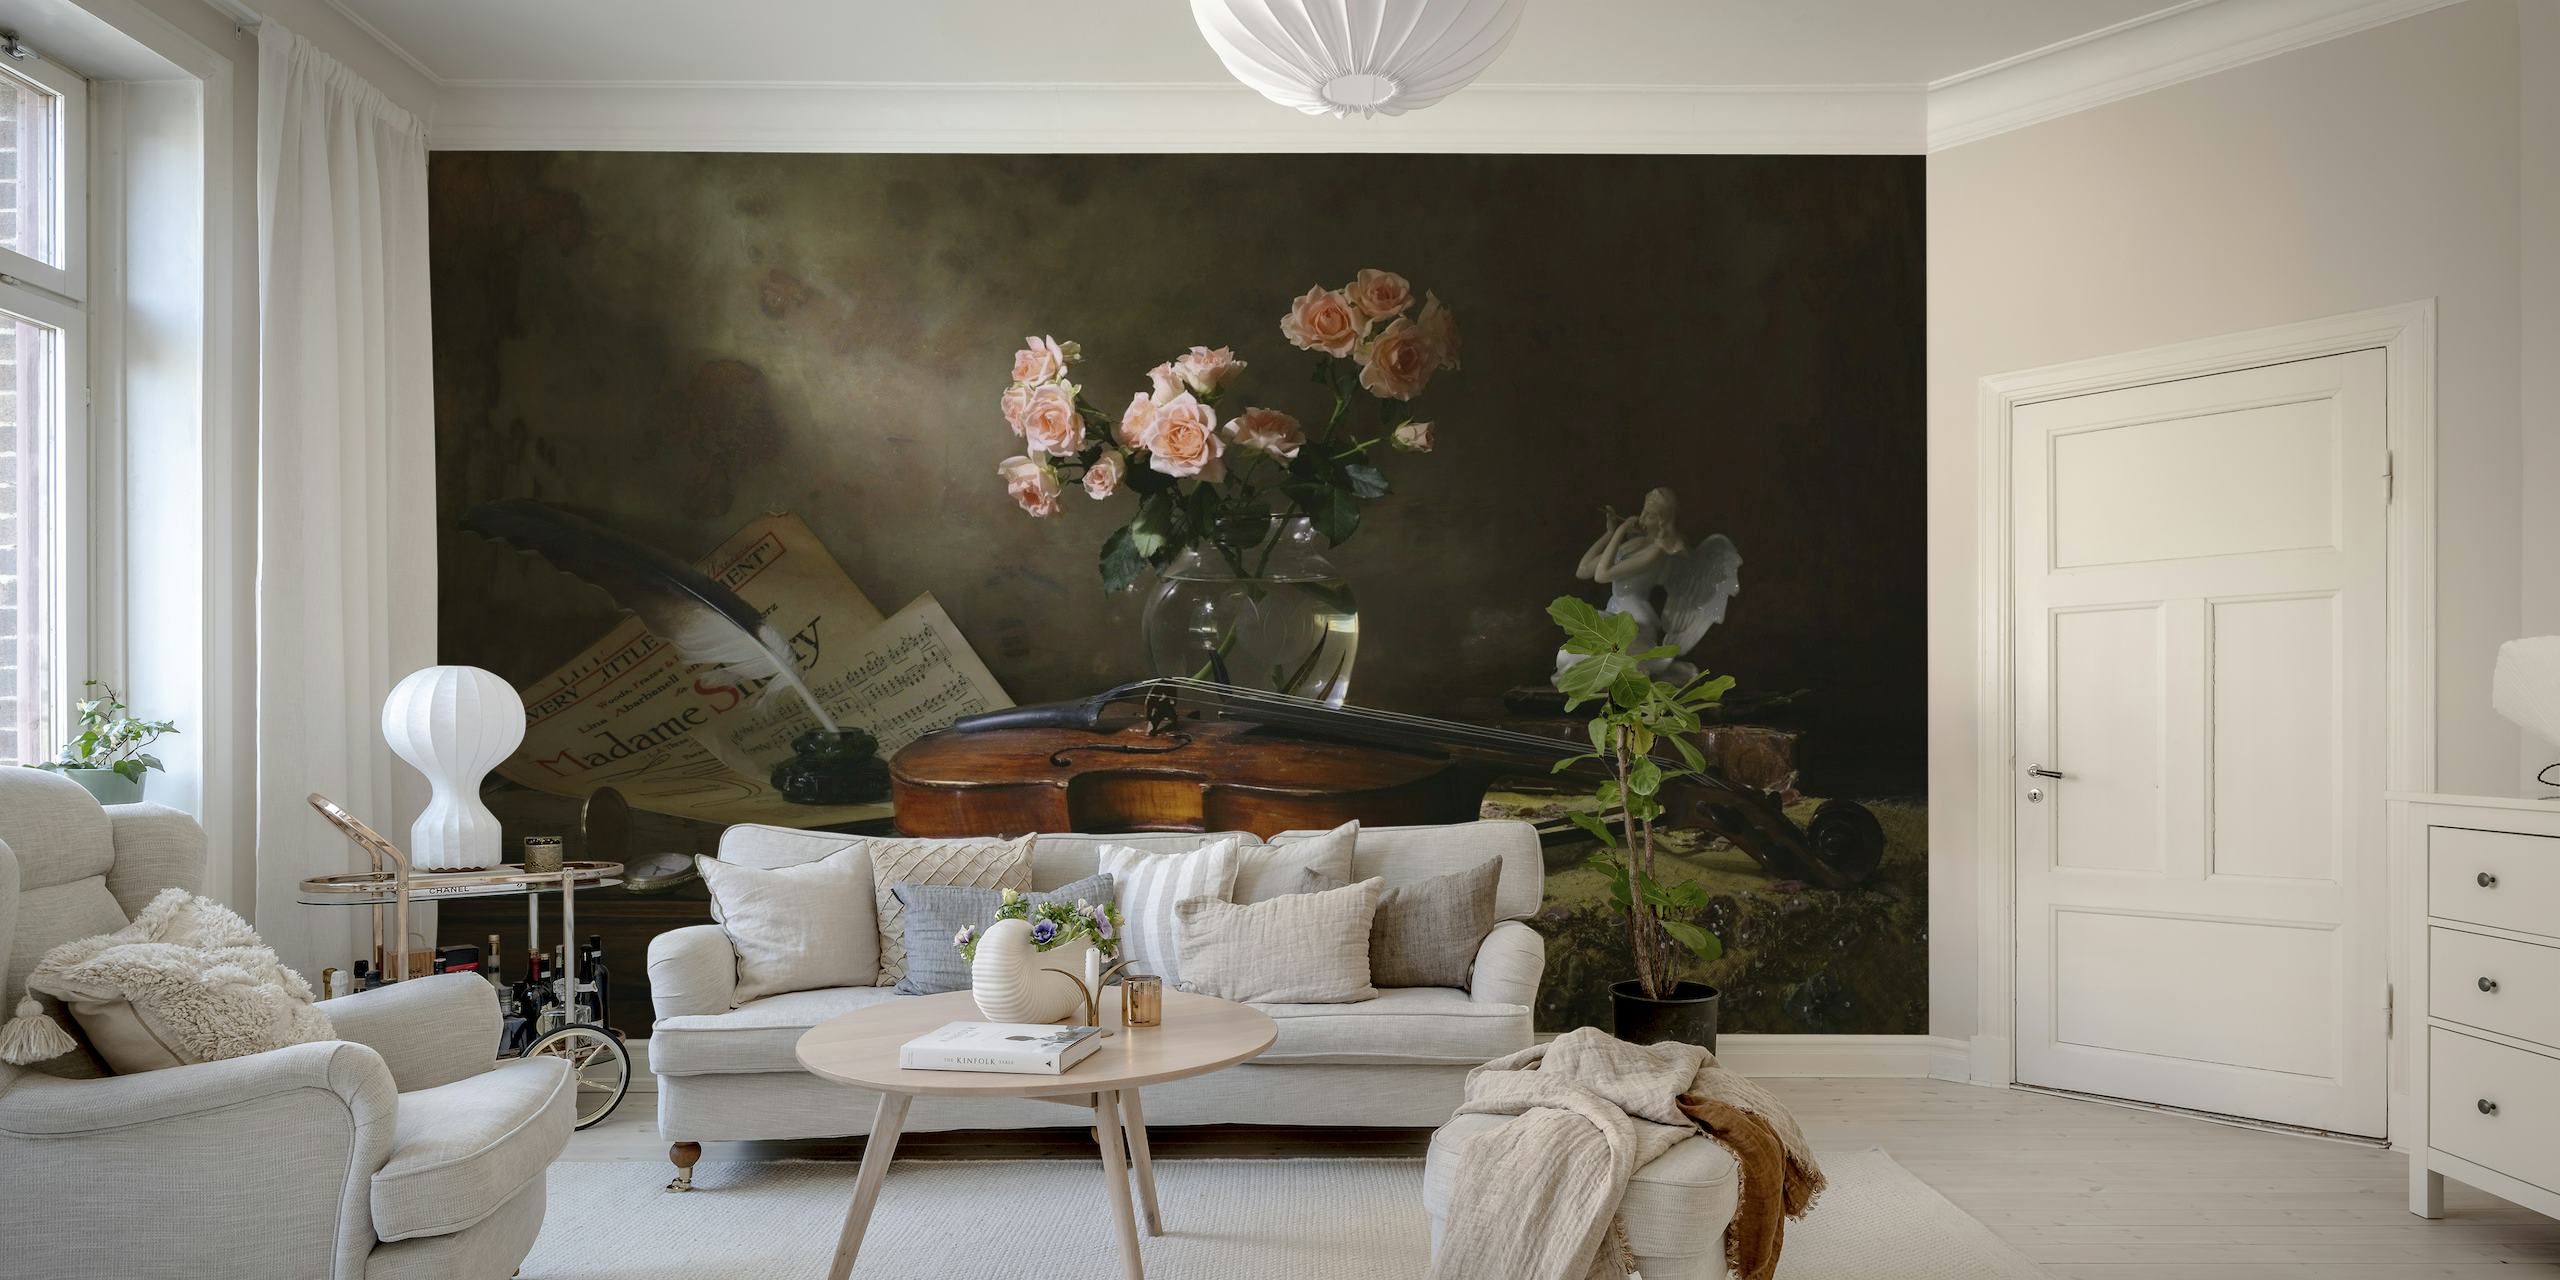 Zidni mural mrtve prirode s violinom i ružama starinskog dojma